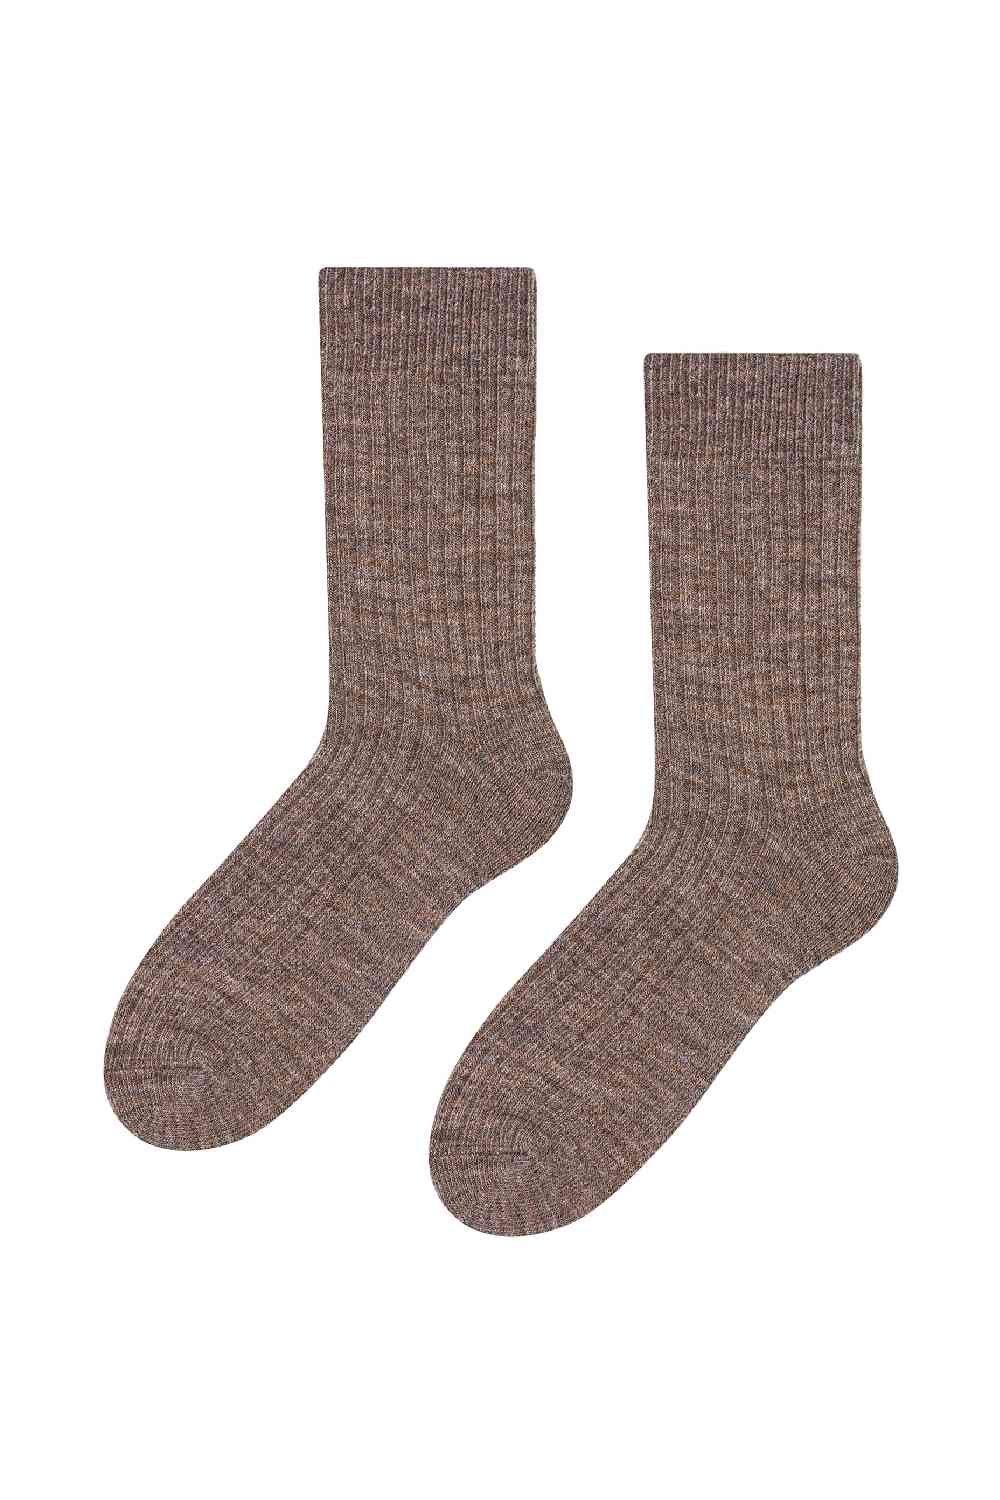 Alpaca Wool Socks for Winter Knitted Crew Boot Socks